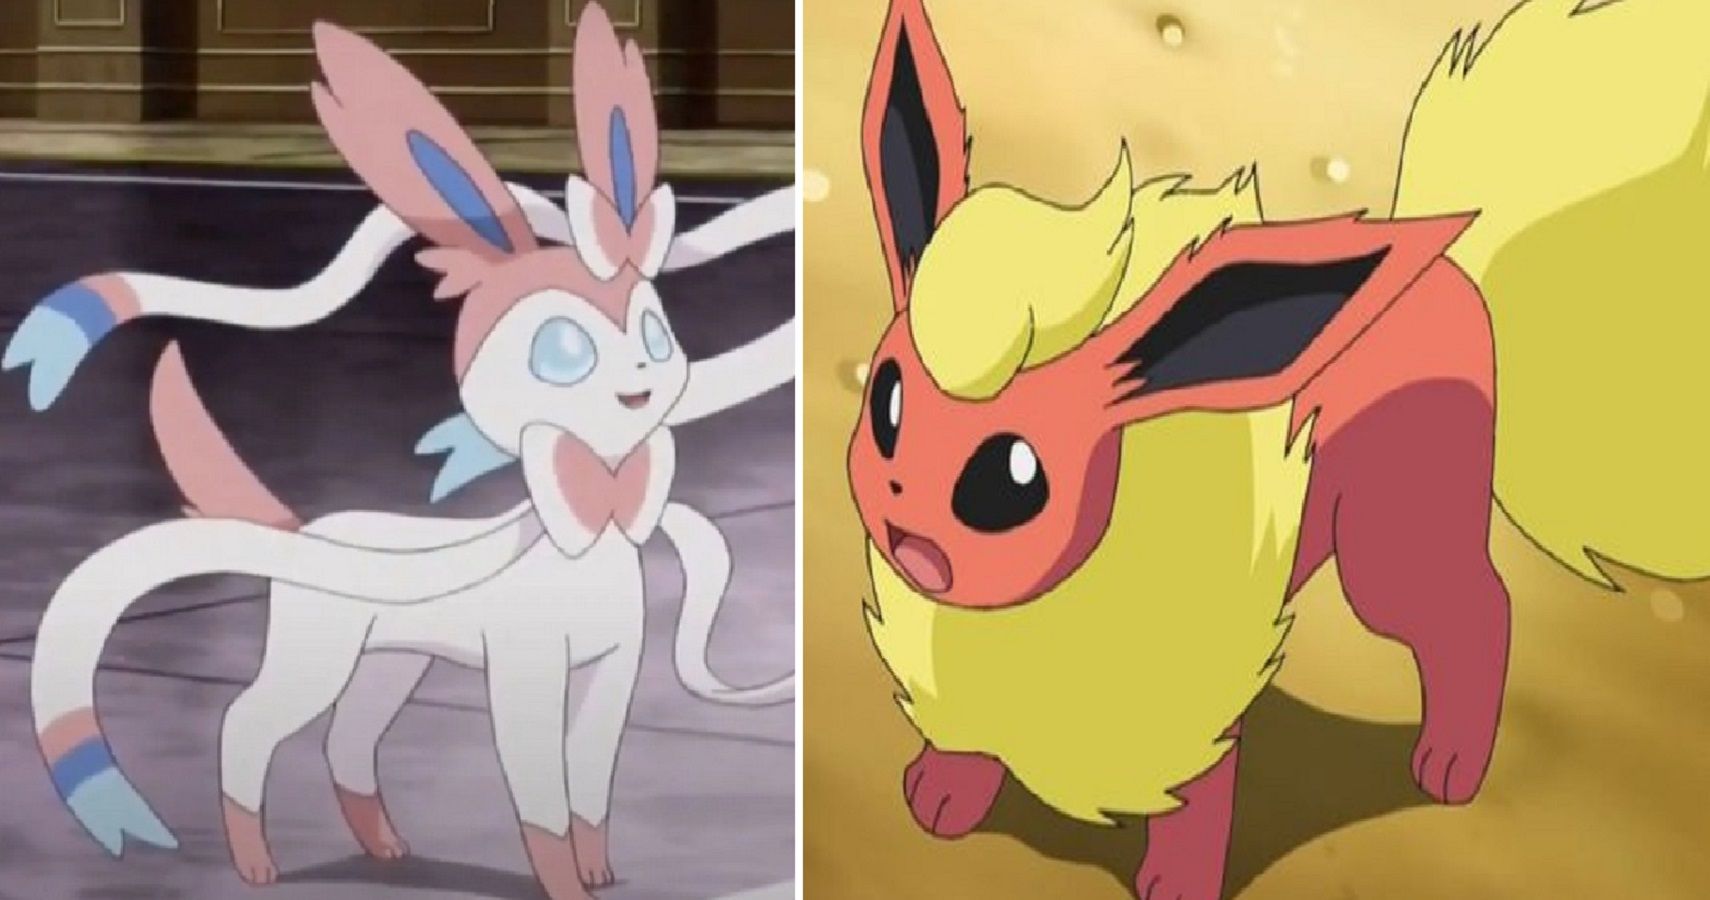 A split image of the Pokémon Sylveon and Flareon